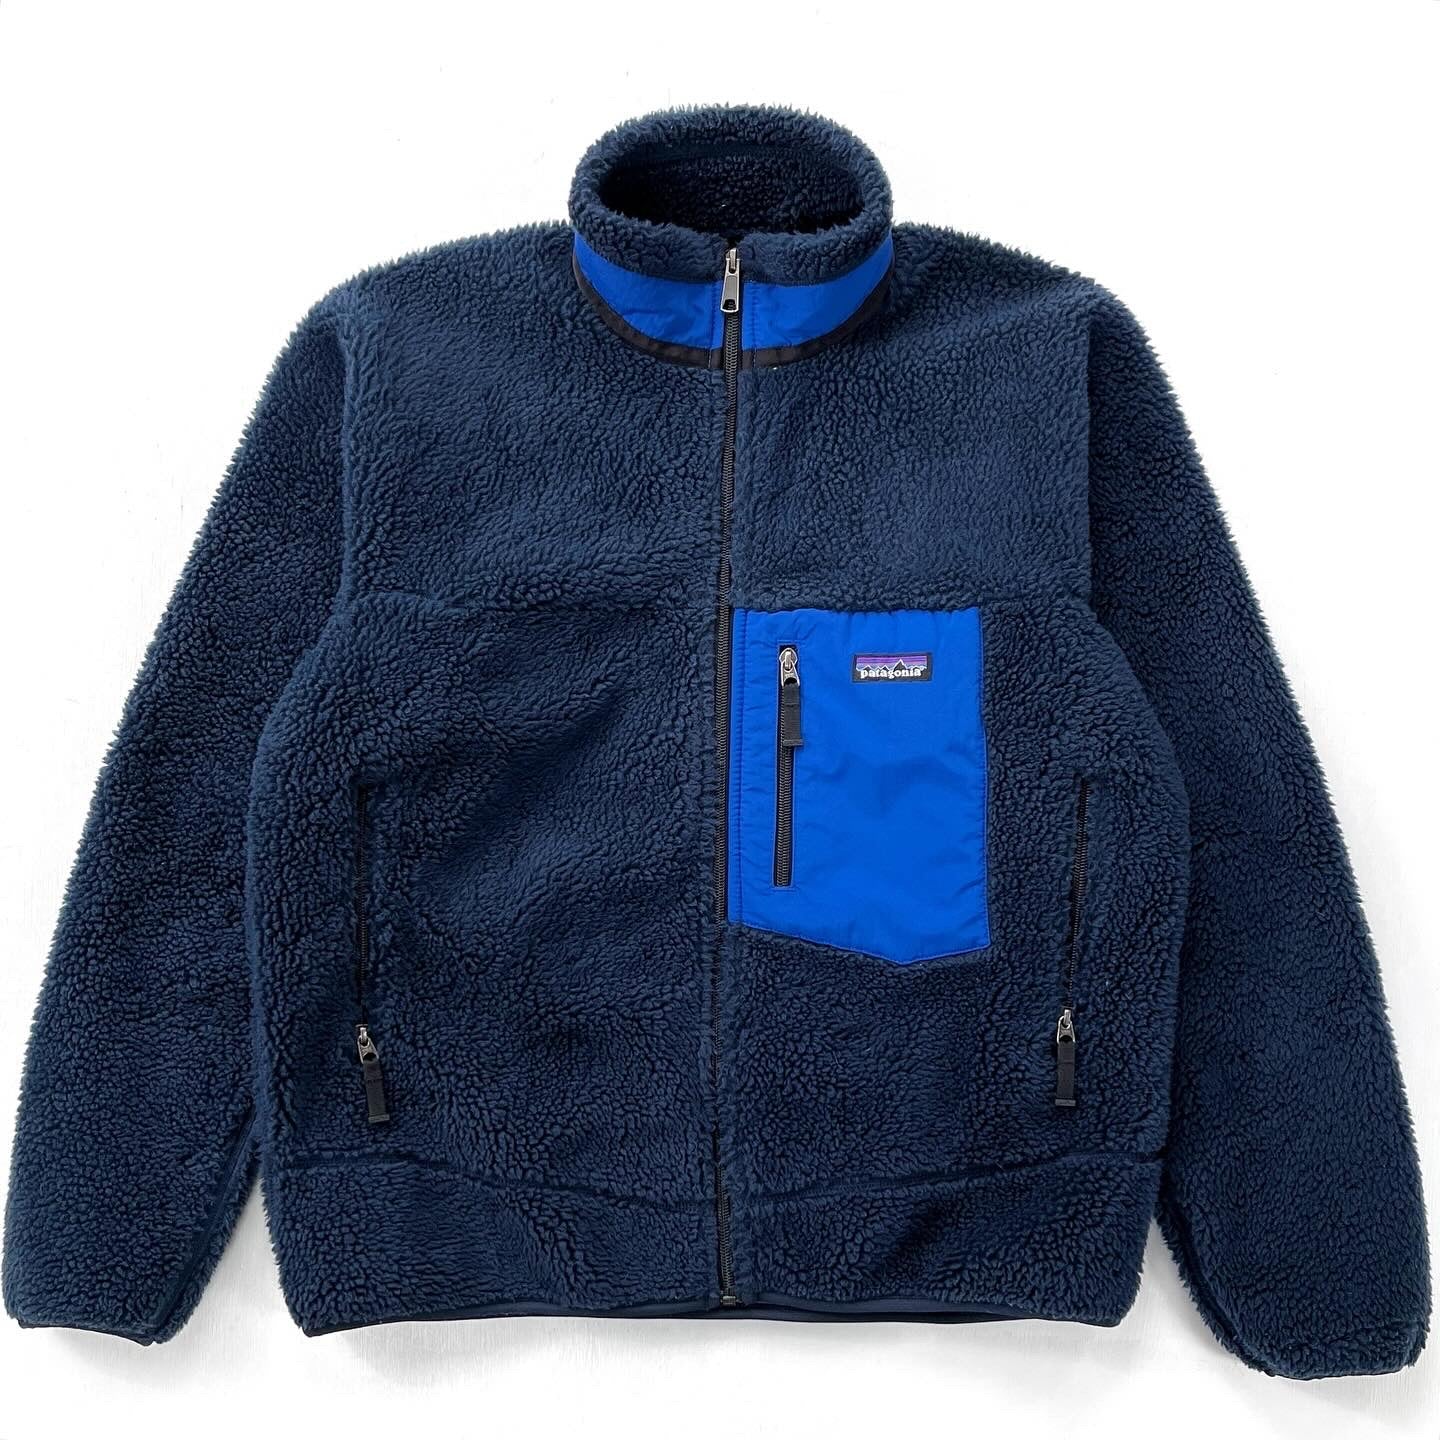 2008 Patagonia Classic Retro-X Fleece Jacket, Dark Blue (M)